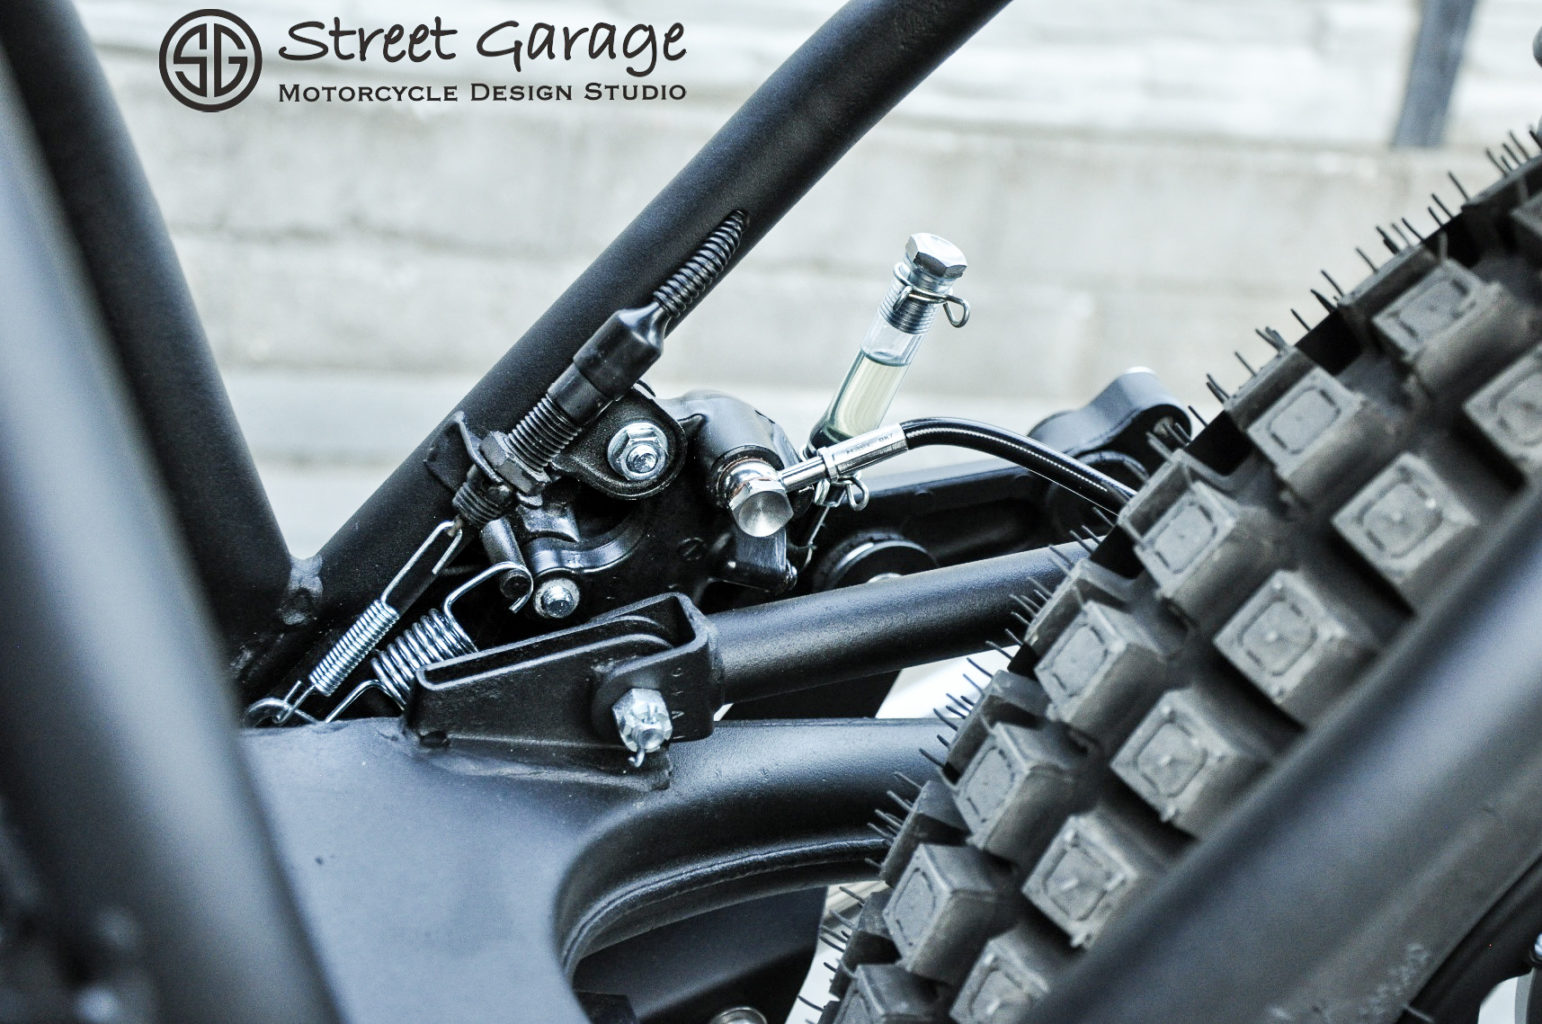 Honda CB750F "James" by Street Garage